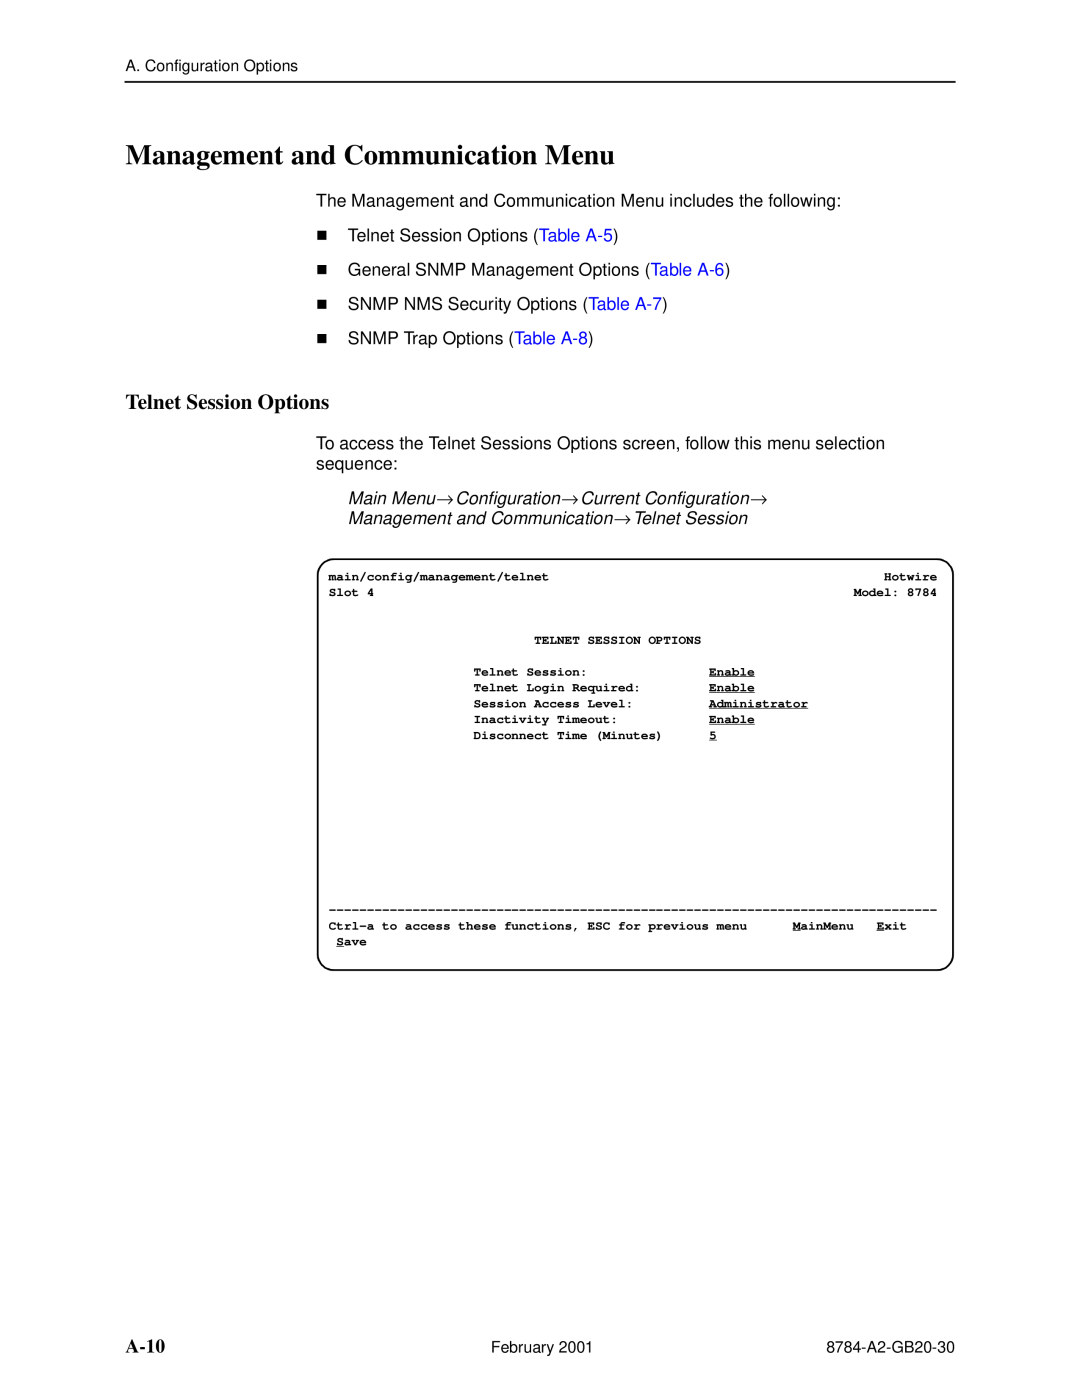 Paradyne 8784 manual Management and Communication Menu, Telnet Session Options, A-10 